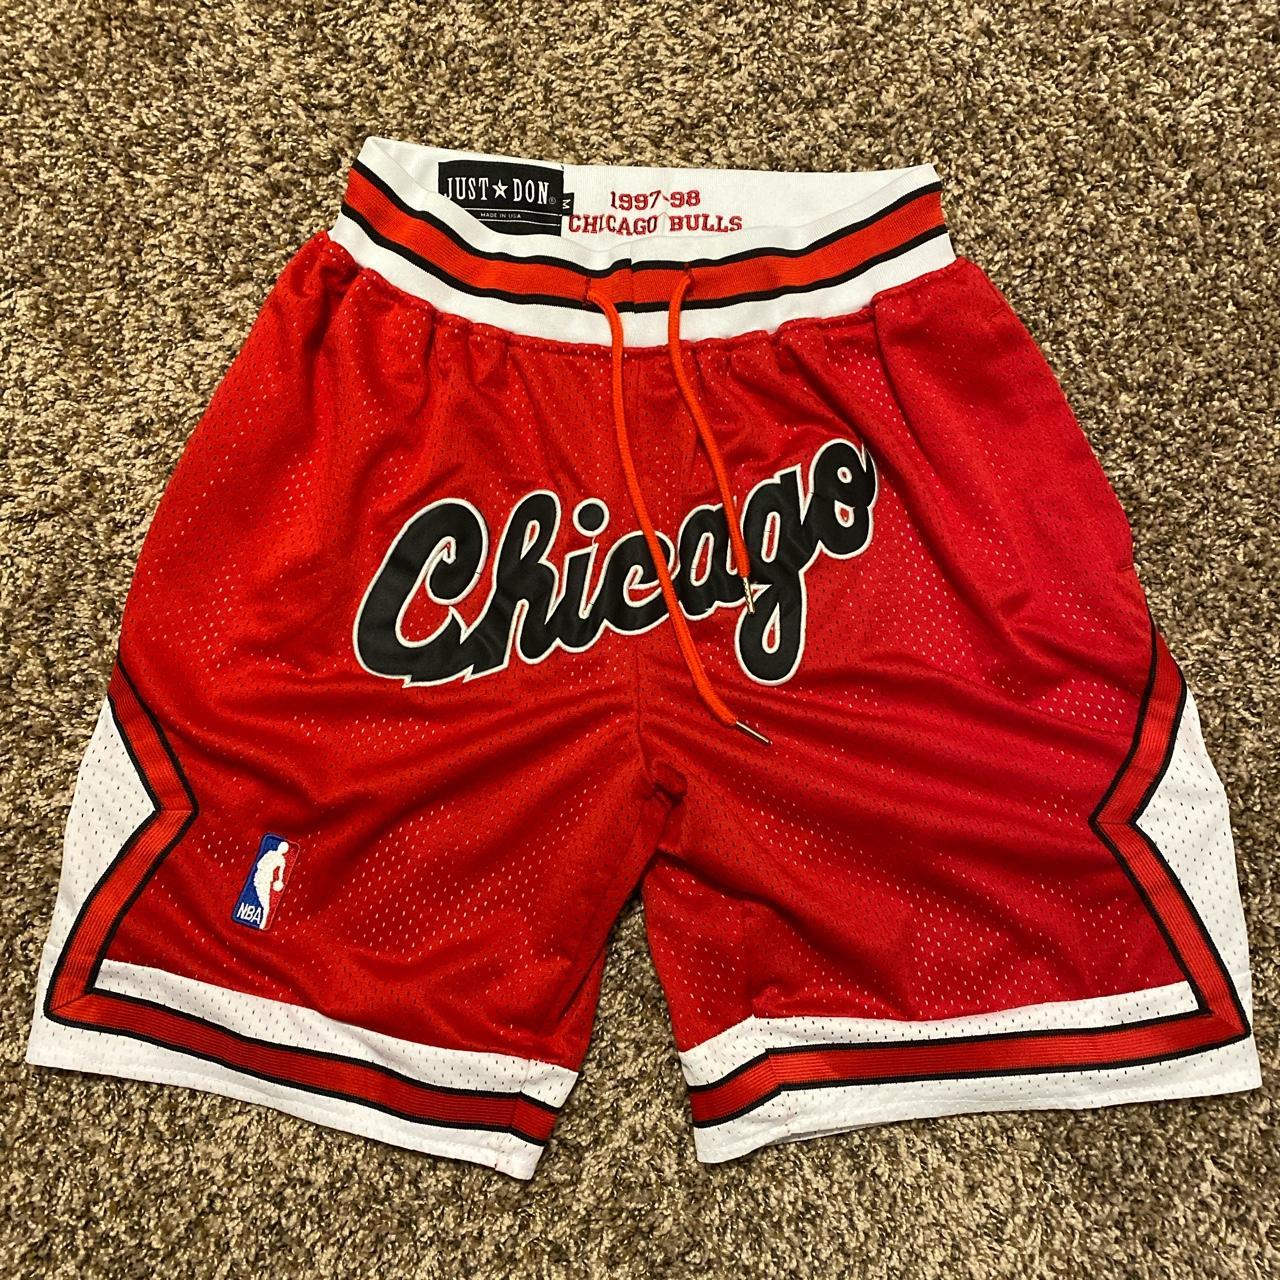 Mitchell & Ness x JUST DON 1997-98 Chicago Bulls Shorts - Depop